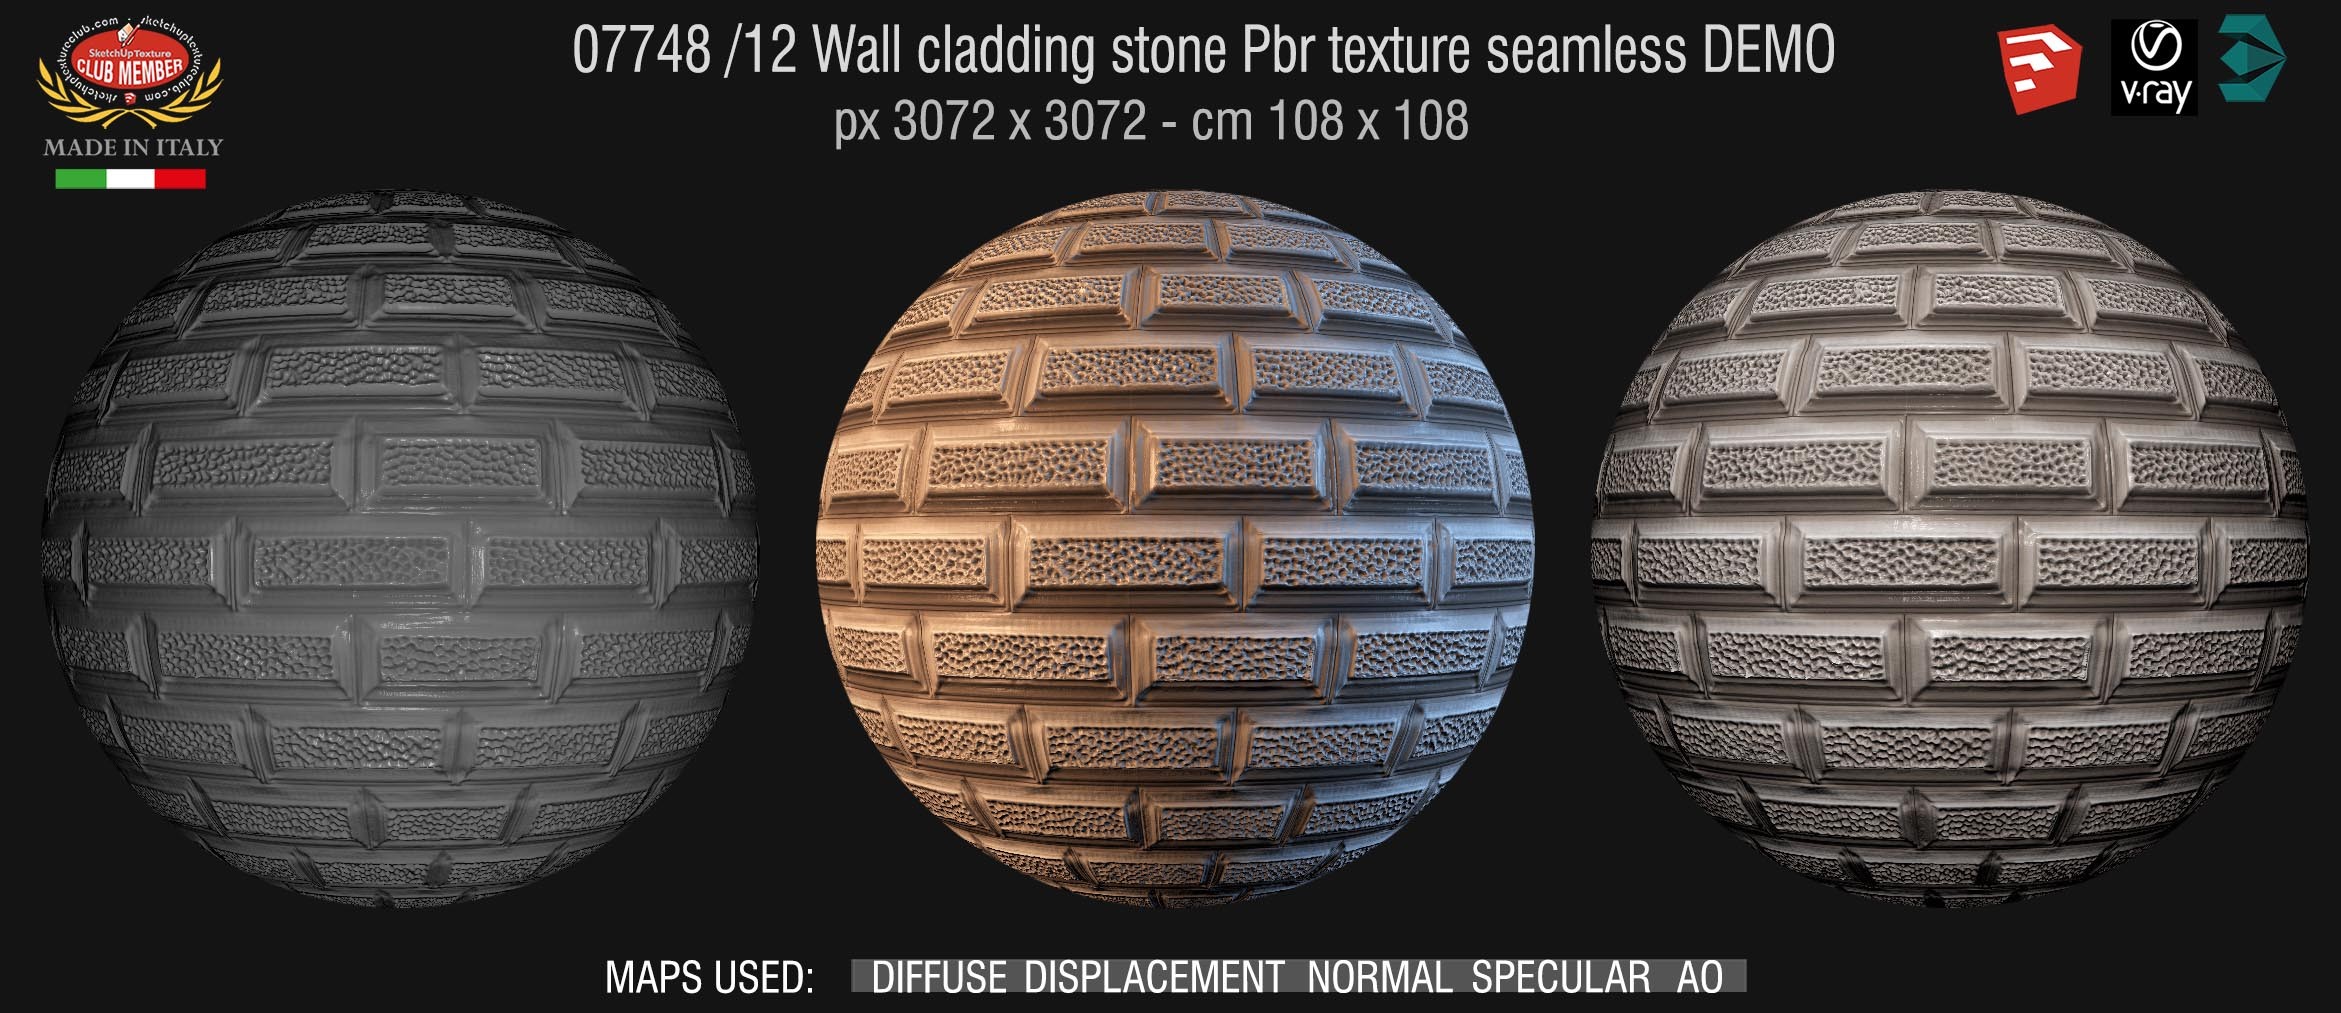 07748/12 Wall cladding stone pbr texture seamless demo